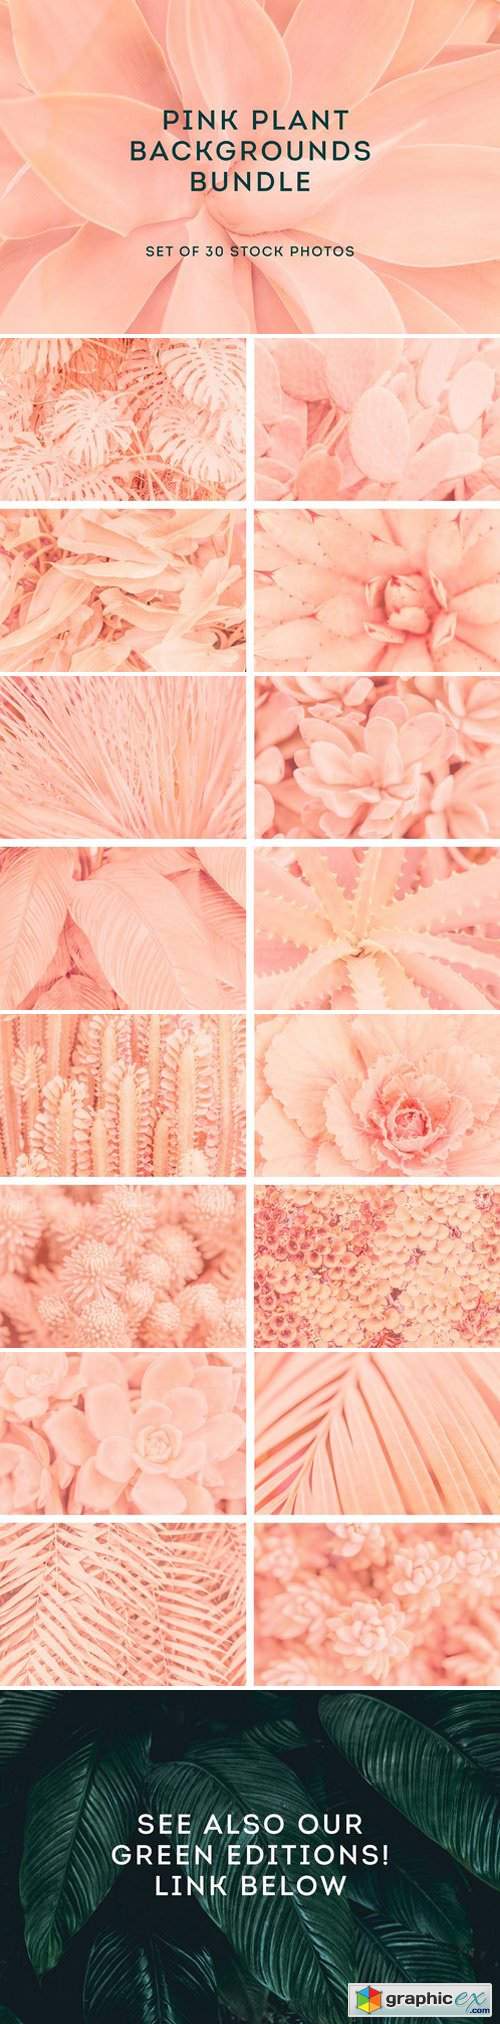 Pink backgrounds bundle